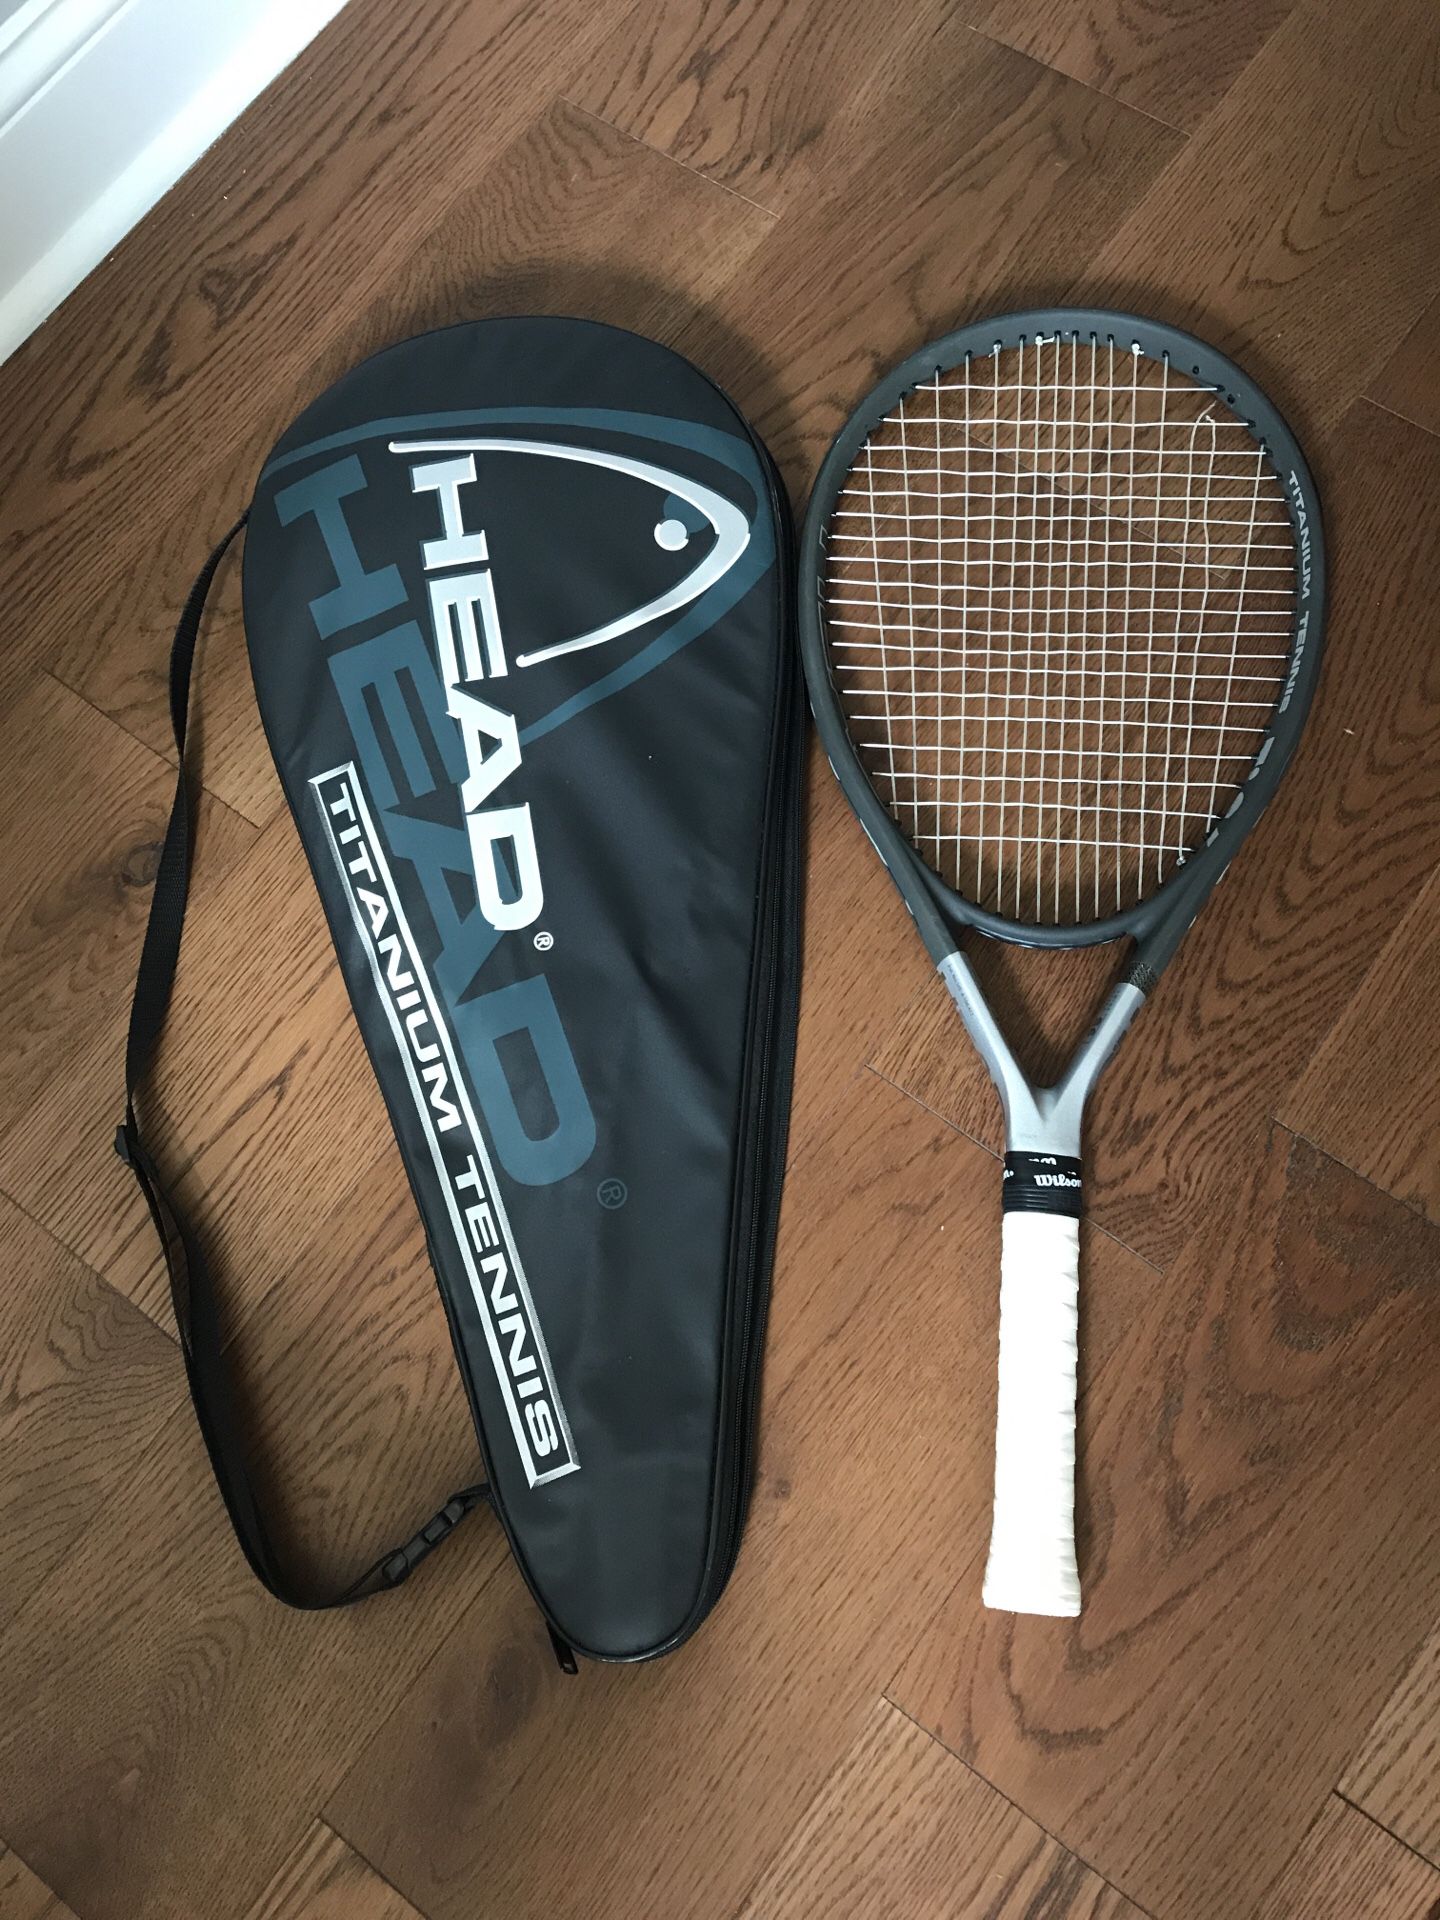 HEAD Titanium Ti. S6 tennis racket